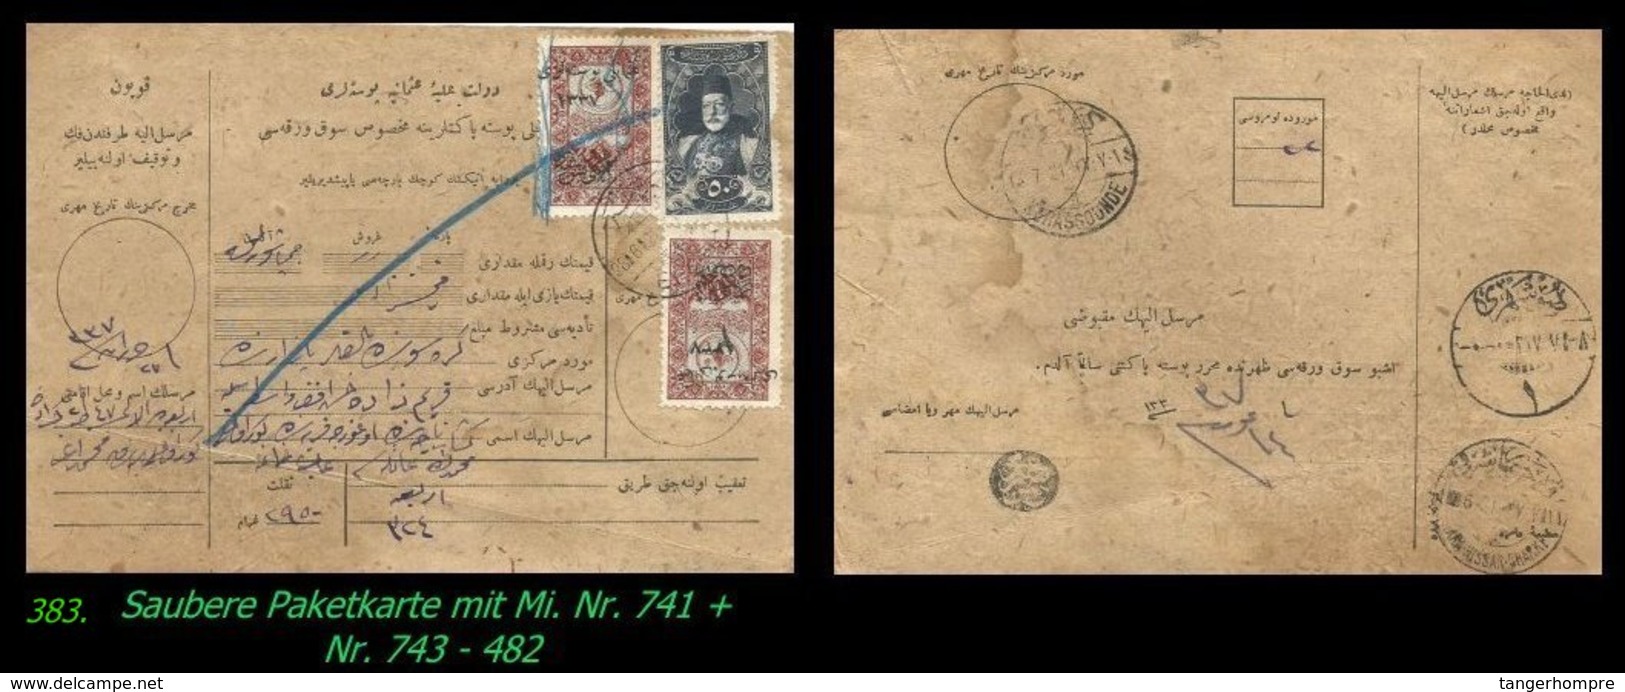 EARLY OTTOMAN SPECIALIZED FOR SPECIALIST, SEE...Mi. Nr. 741 + 743 - Paketkarte - 1920-21 Anatolia